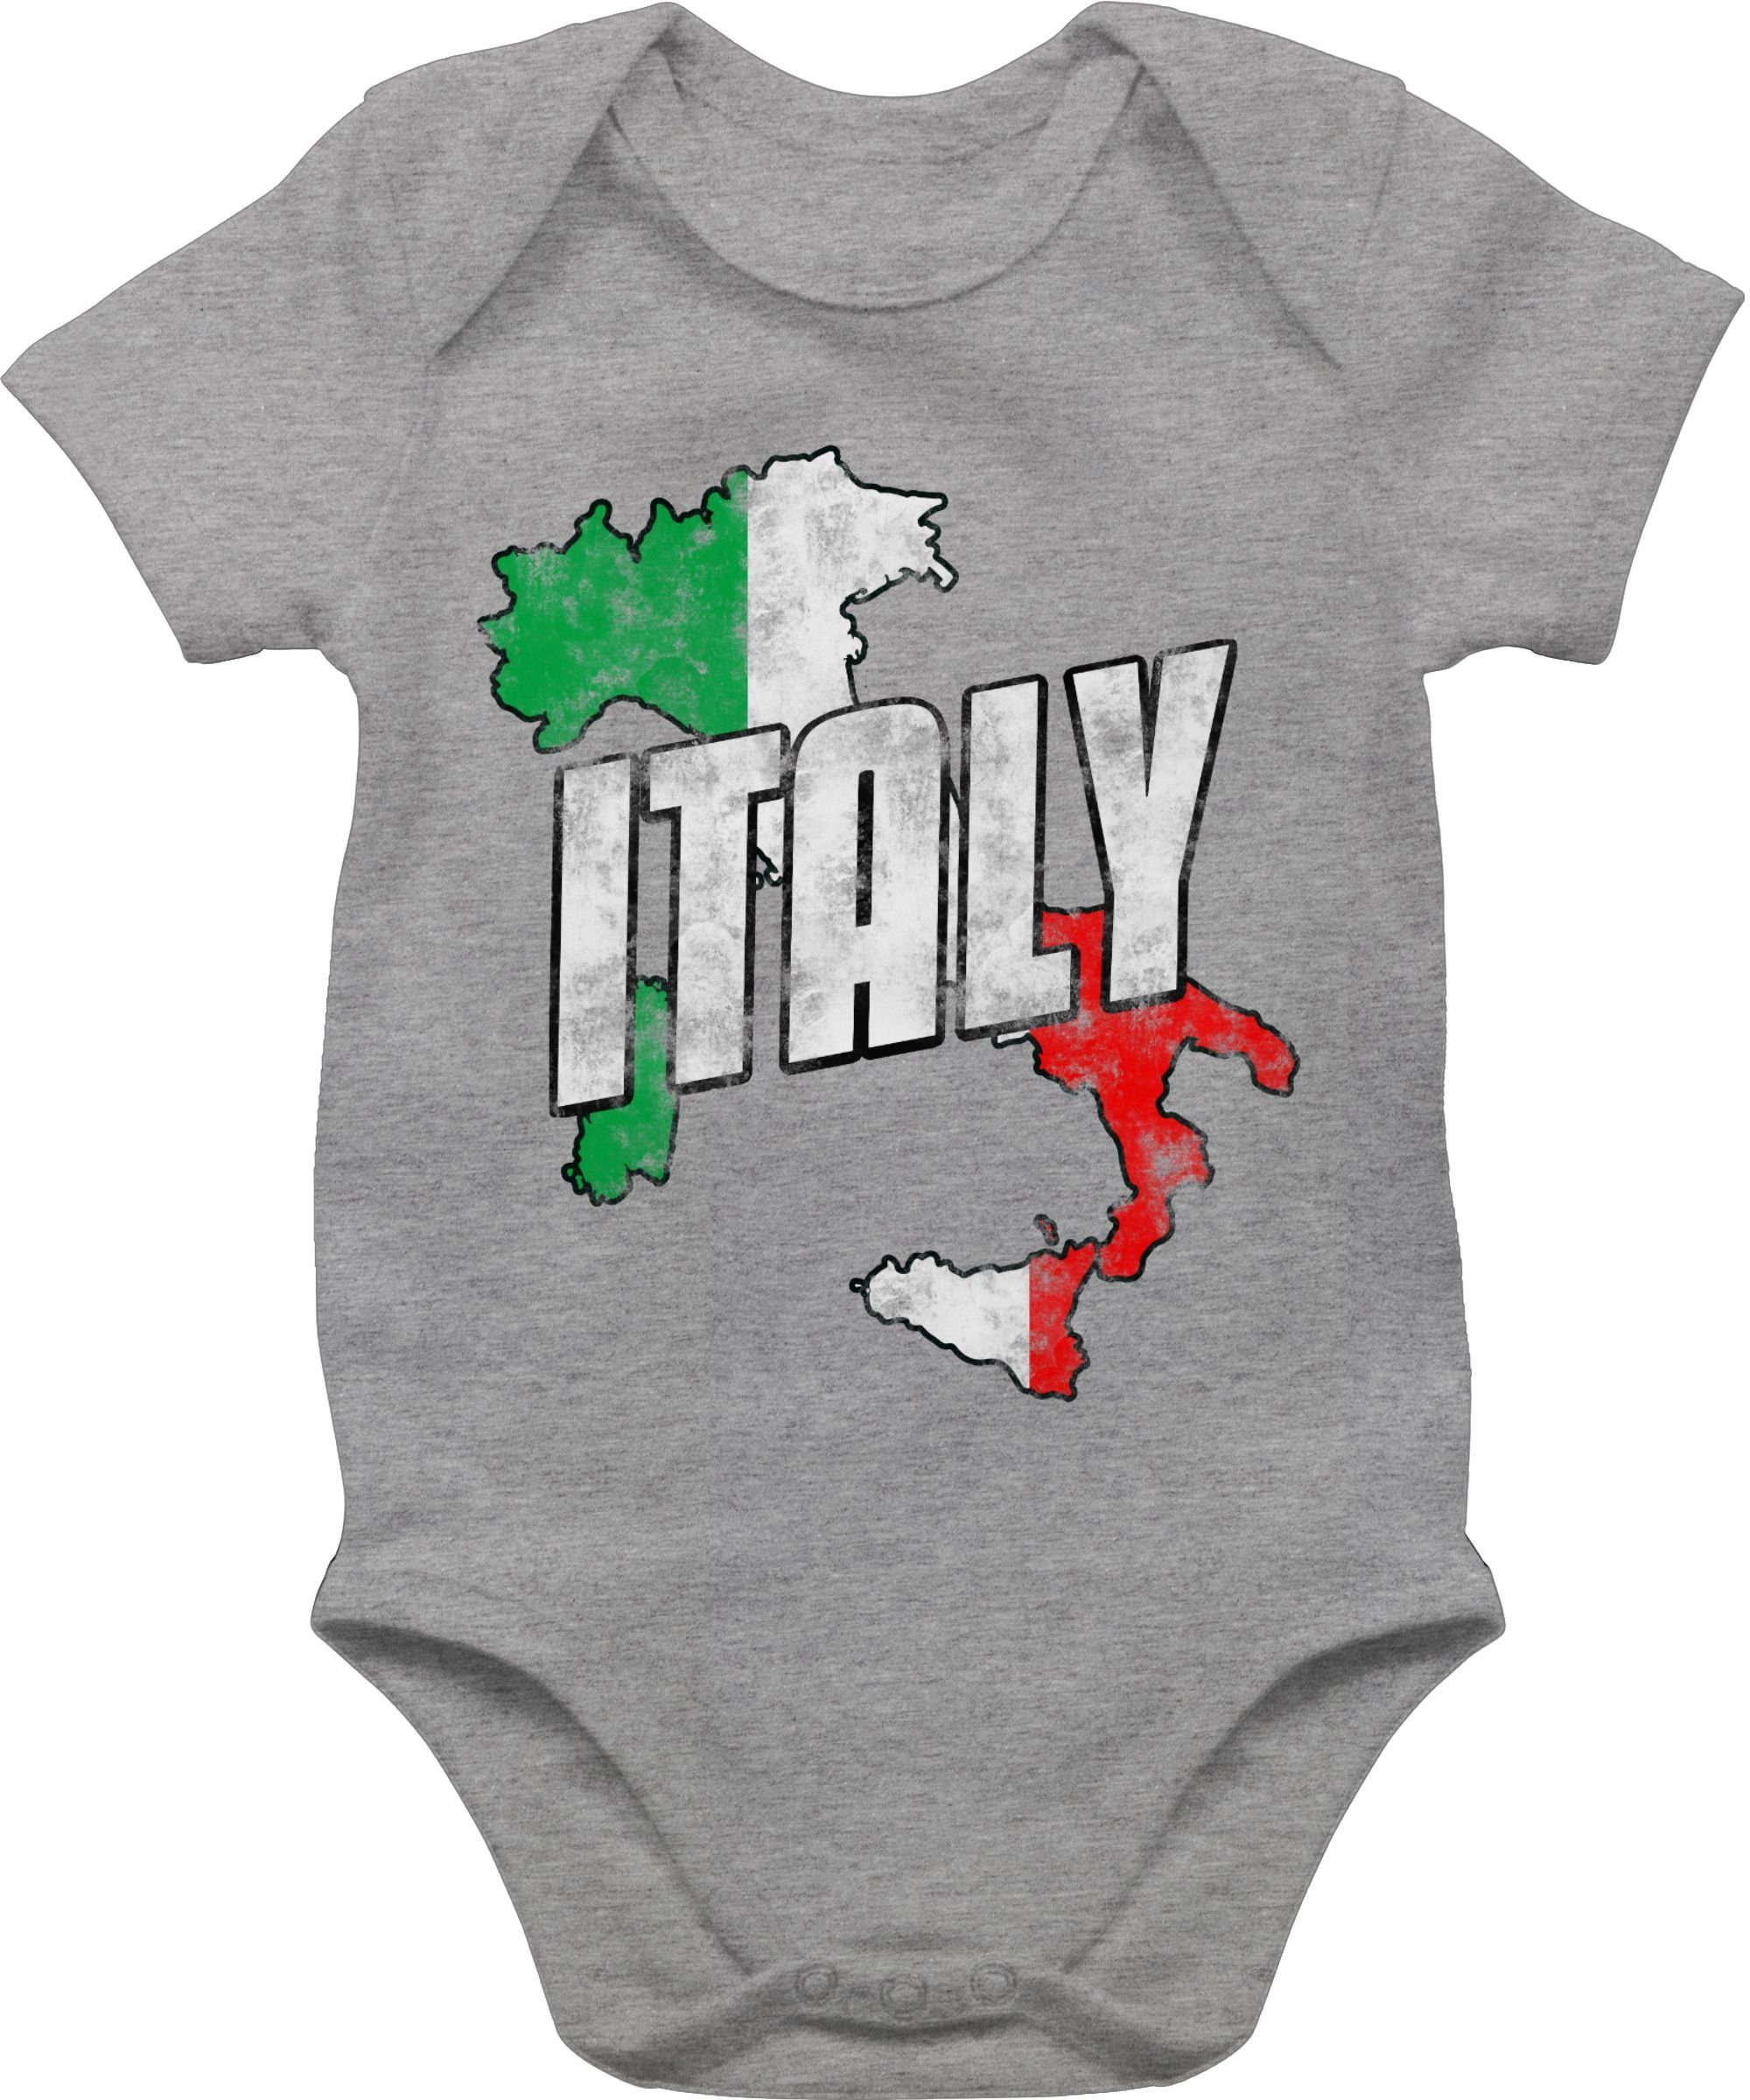 Shirtracer Shirtbody Italy Umriss Vintage Baby Länder Wappen 2 Grau meliert